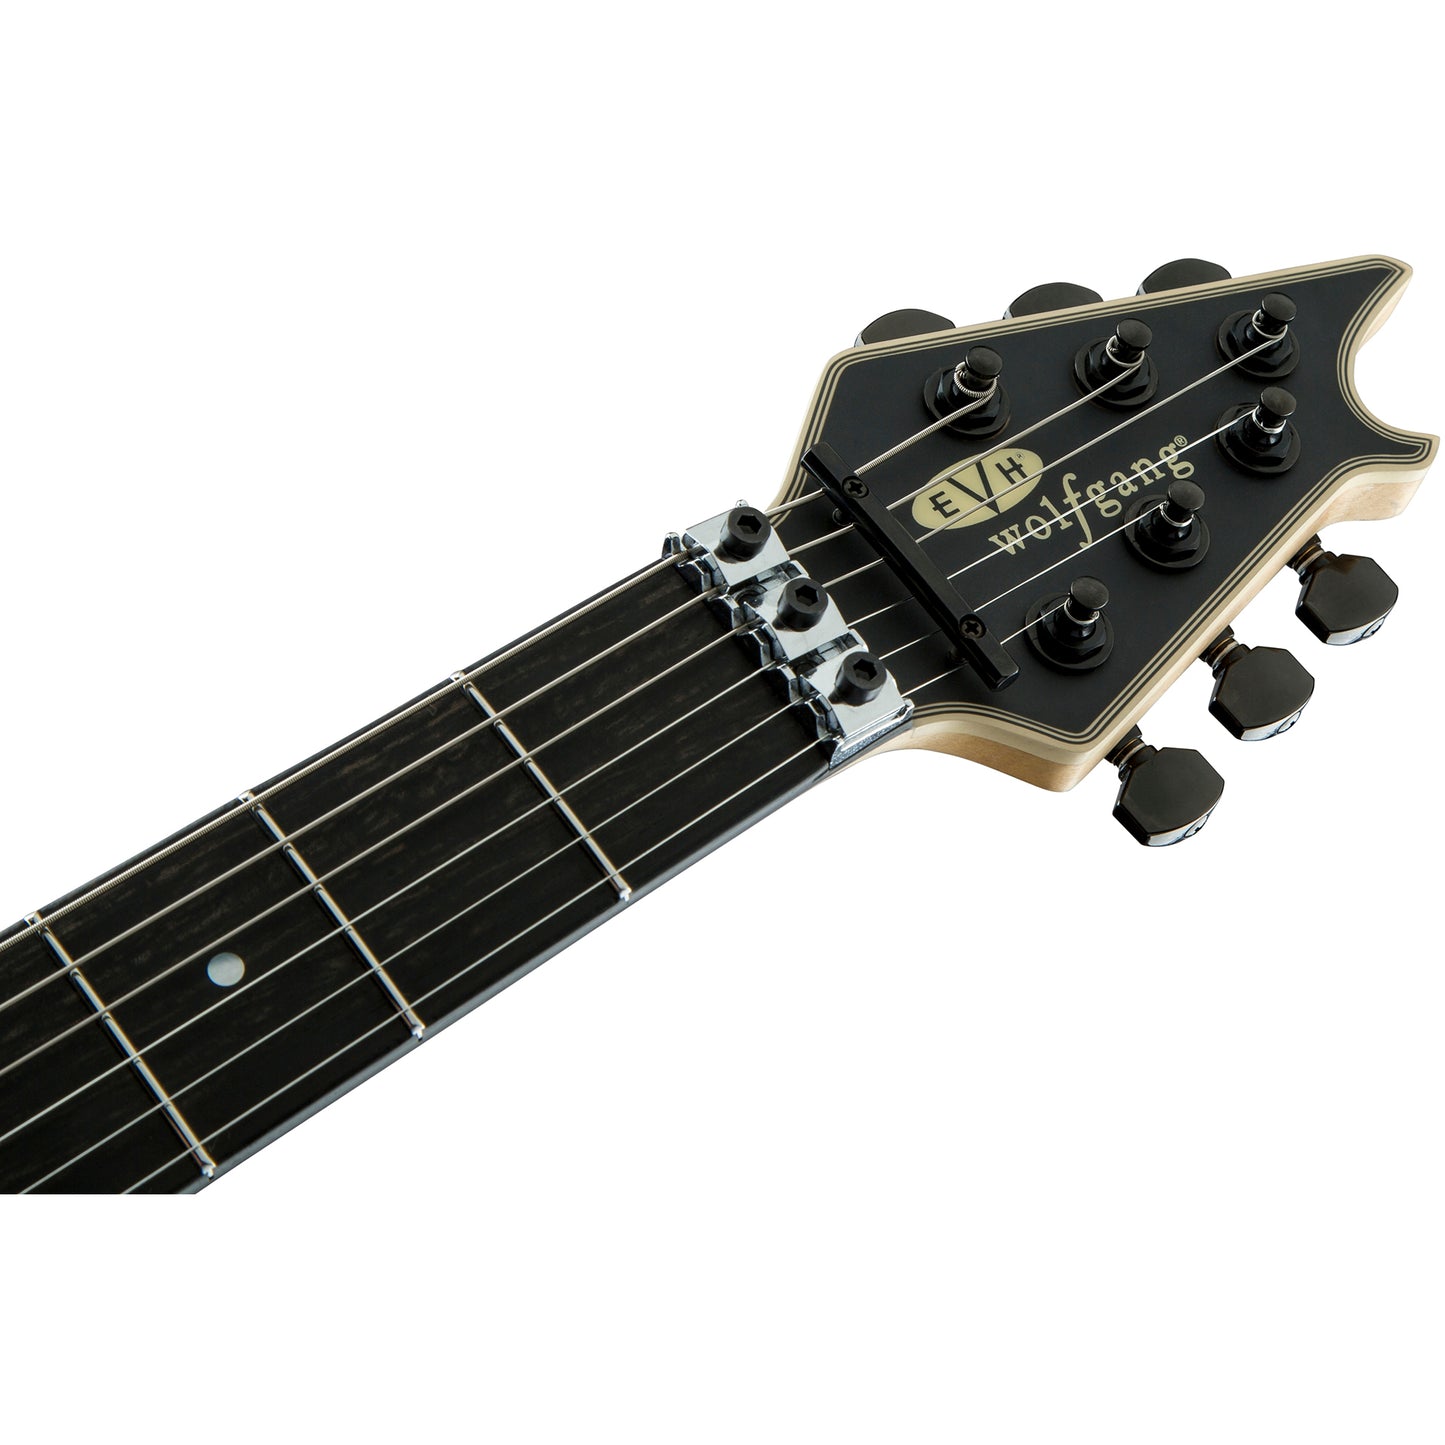 EVH Wolfgang® USA Signature Electric Guitar - Stealth Black